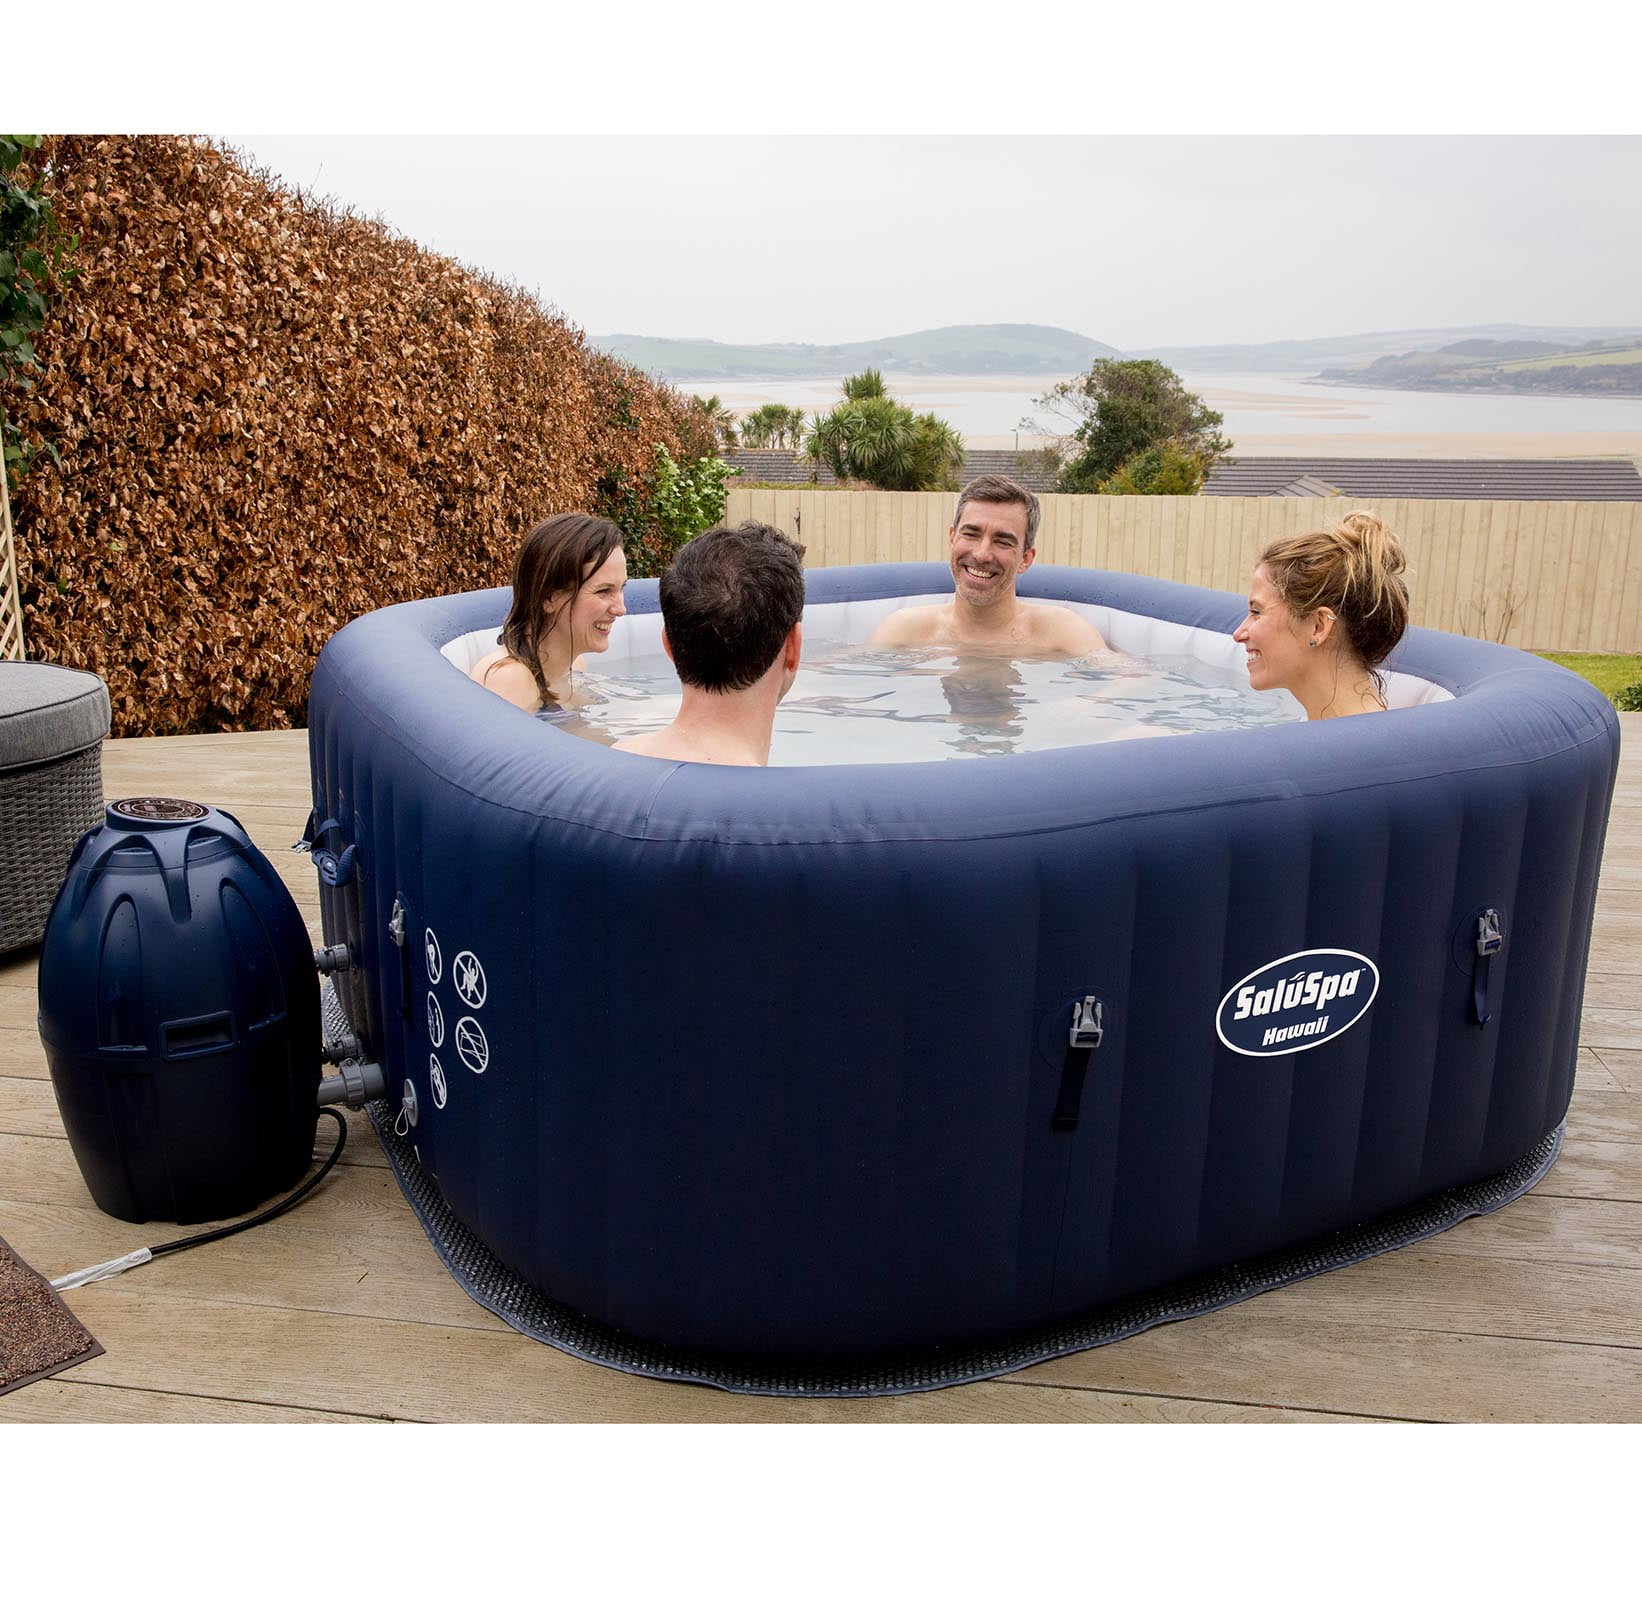 Saluspa Inflatable Hot Tub Manual